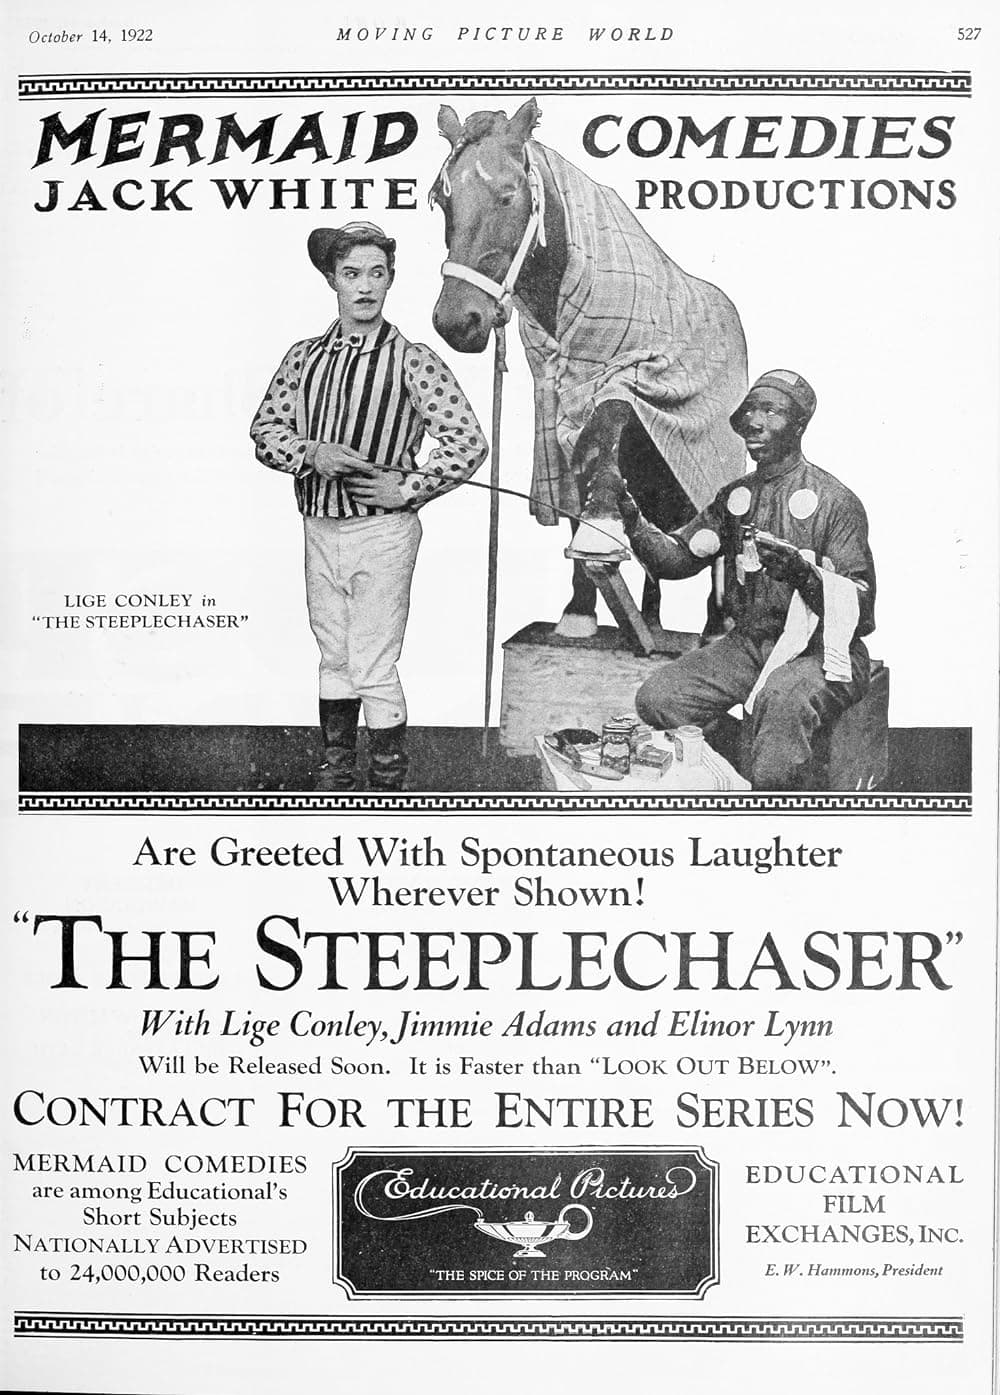 The Steeplechaser